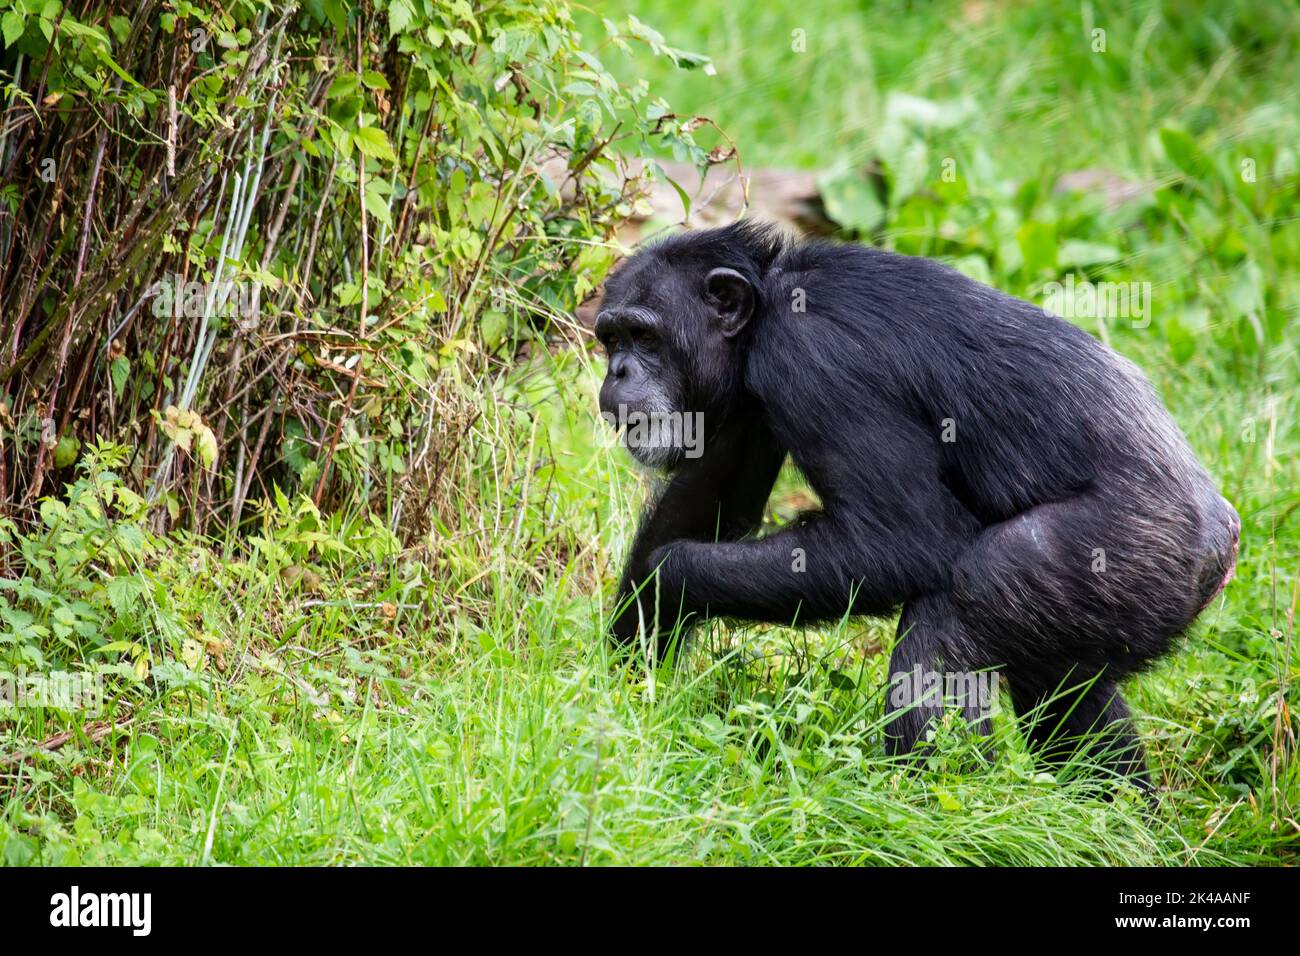 Single Chimpanzee Pan troglodytes in profile moving through grass and undergrowth Stock Photo